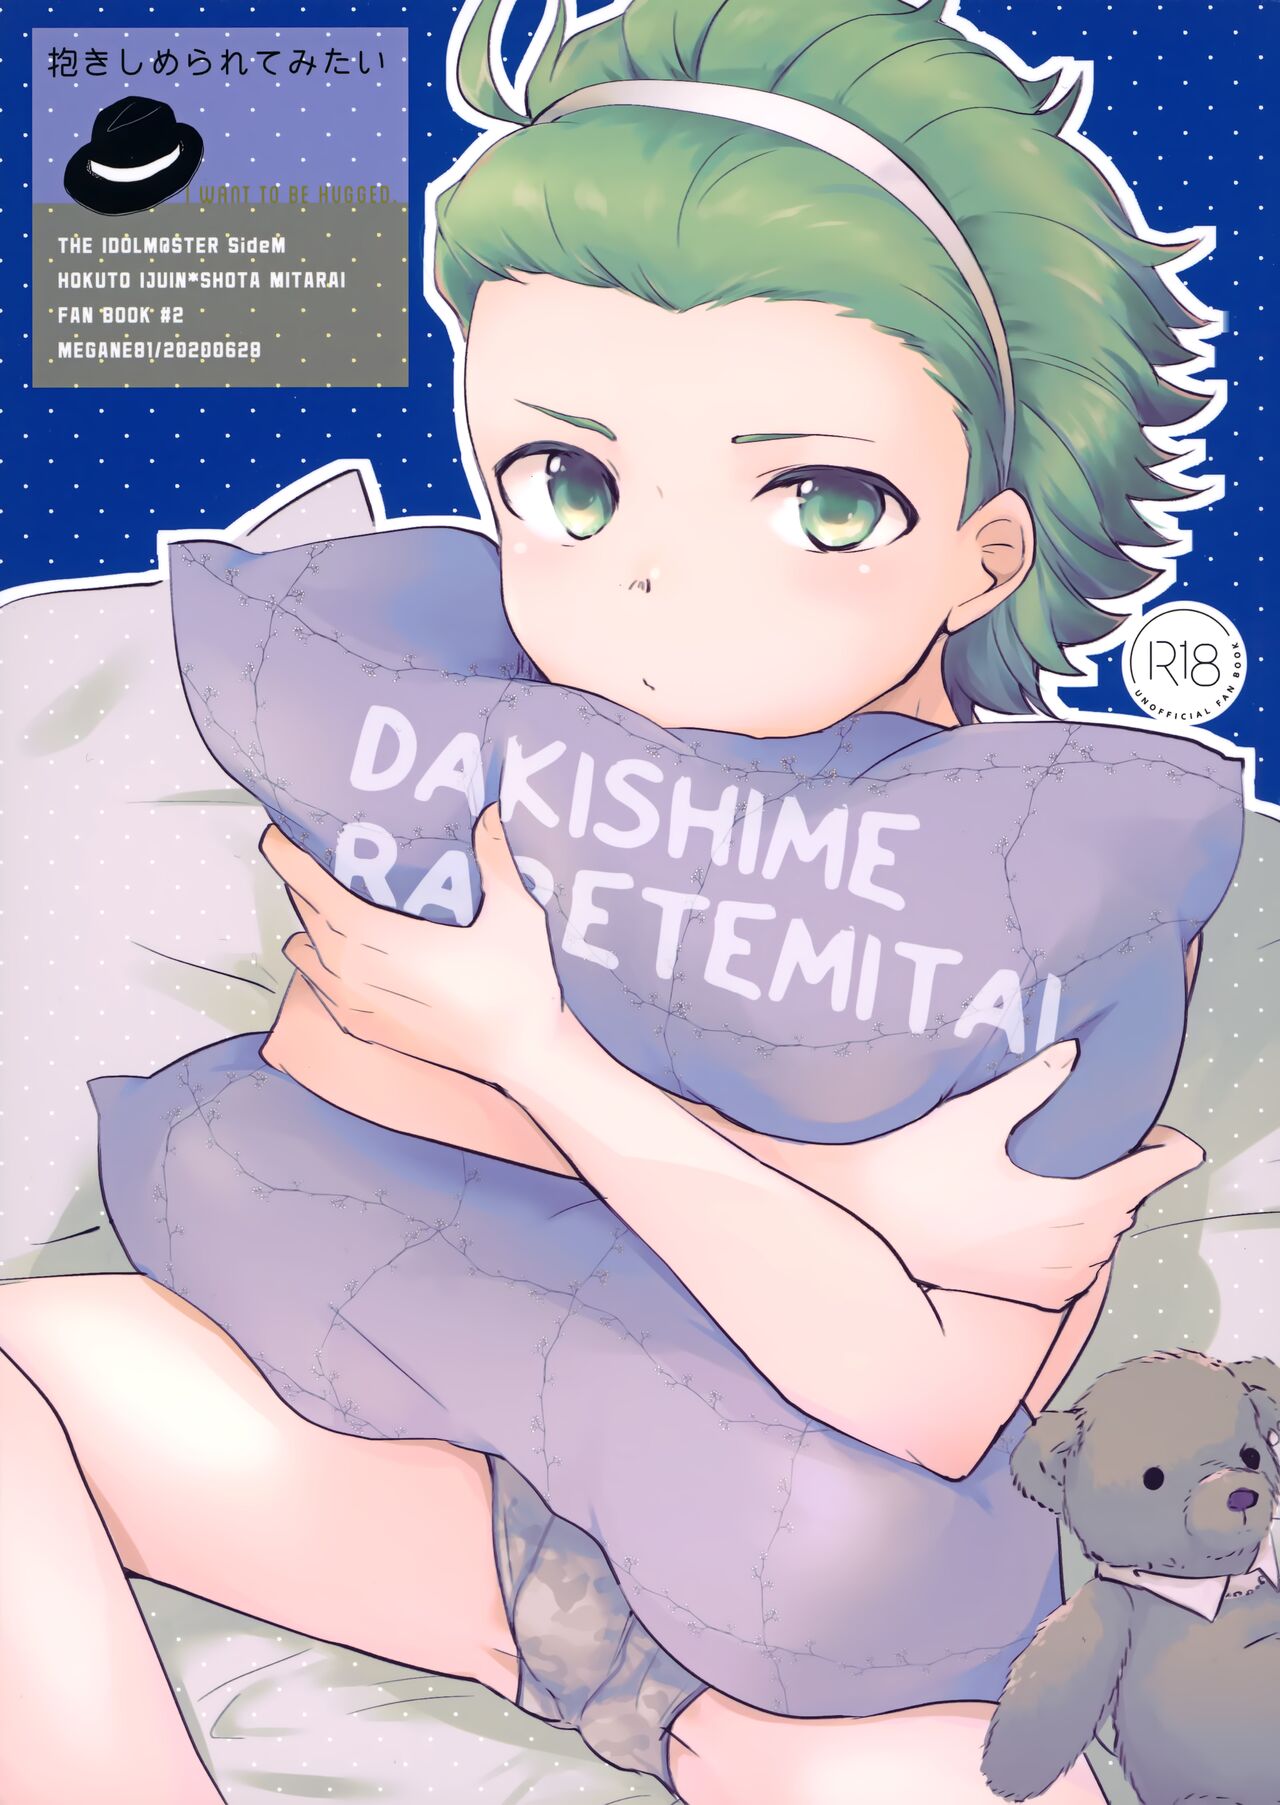 Dakishimerarete Mitai – I Want to Be Hugged